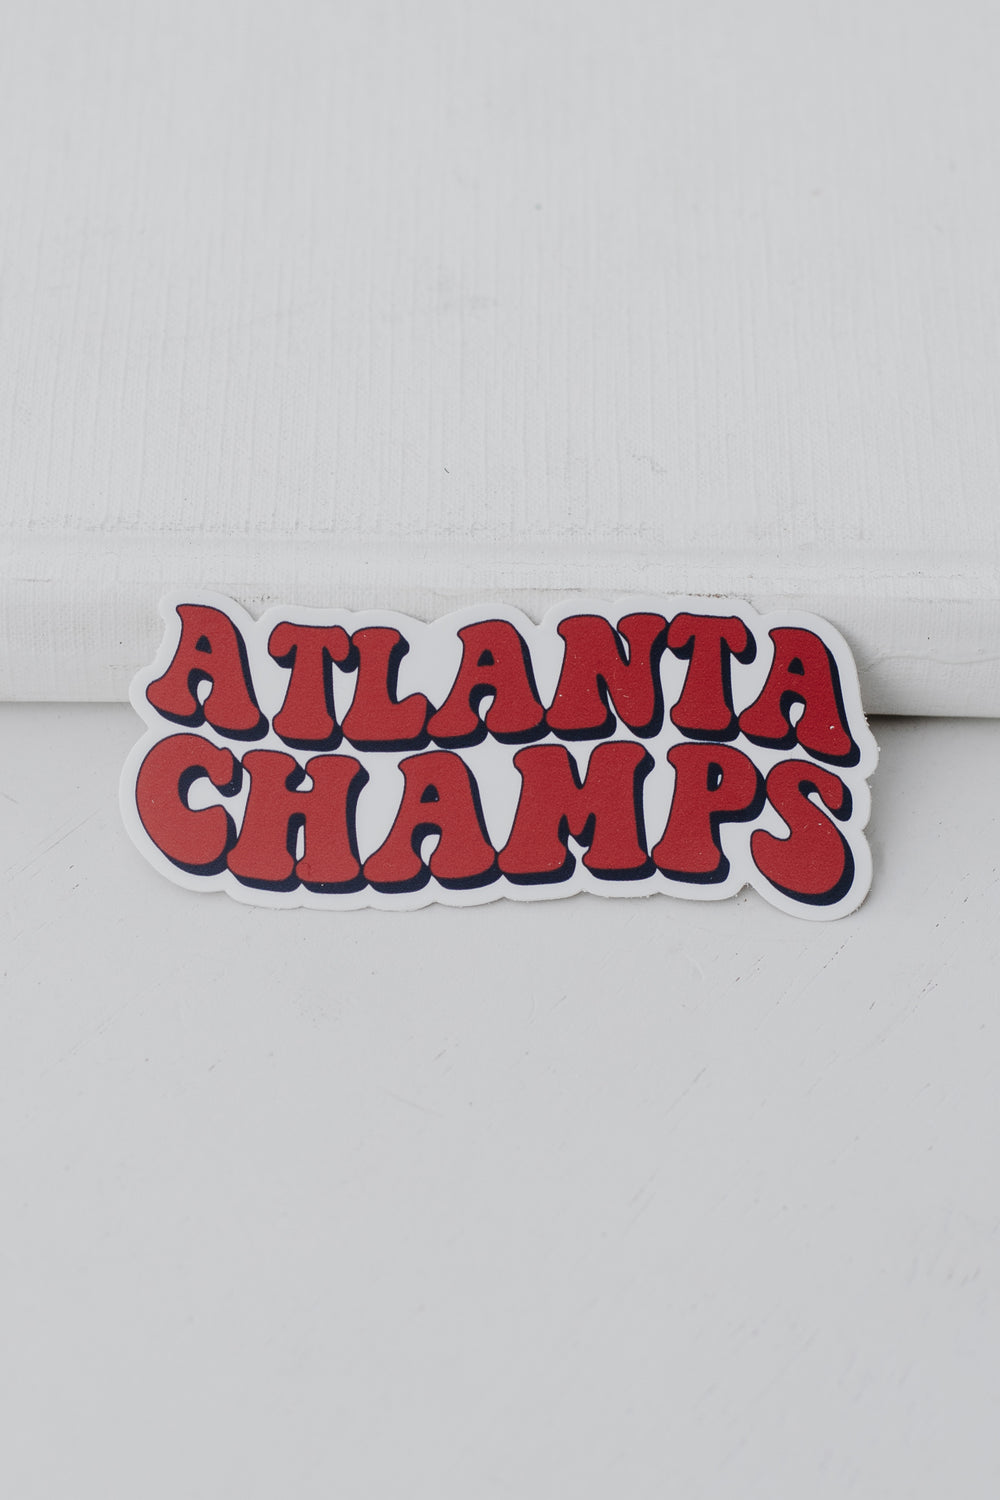 Atlanta Champs Sticker from dress up